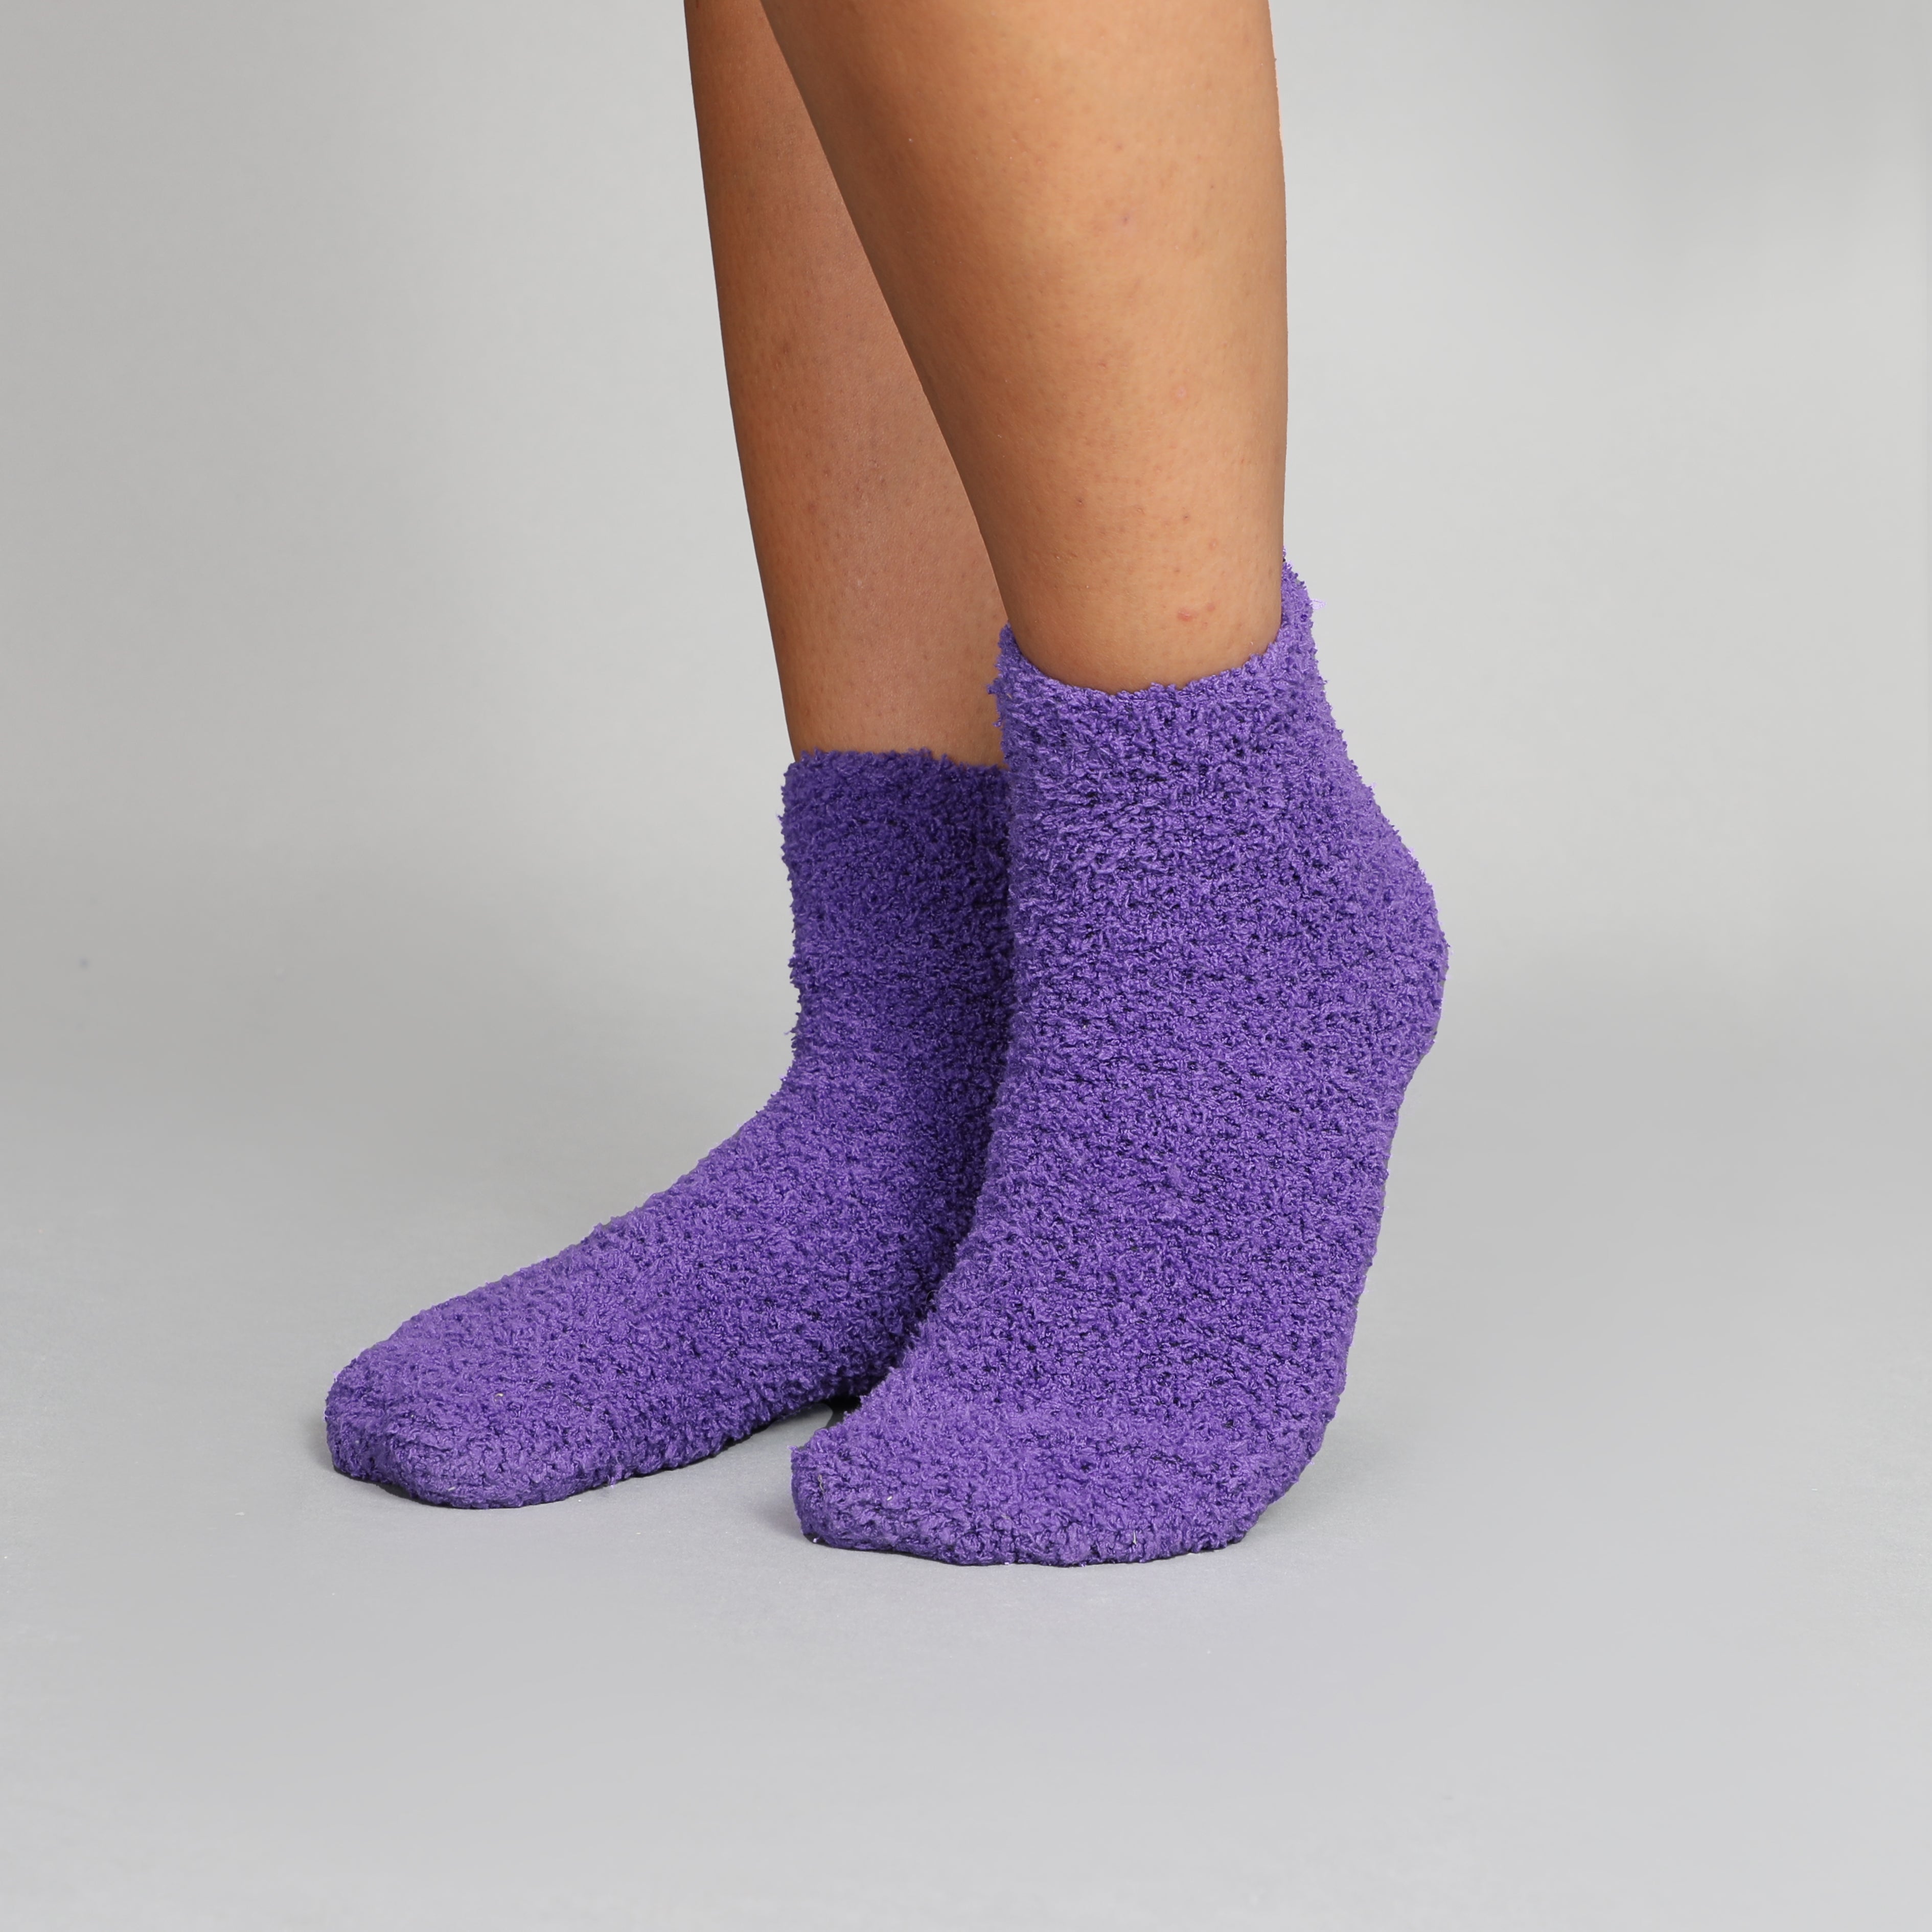 The Cozy Socks